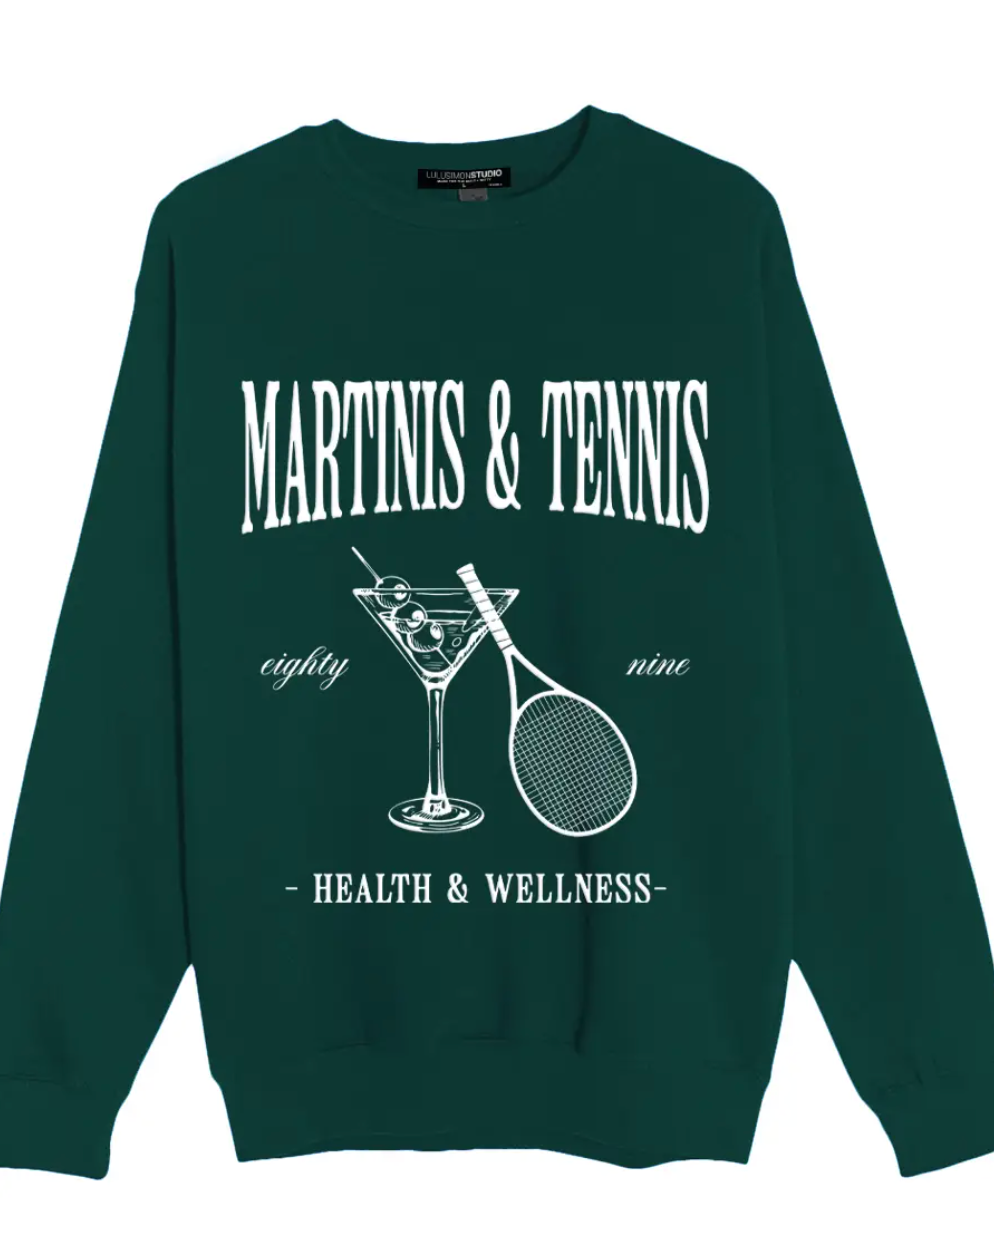 Martinis & Tennis Sweatshirt